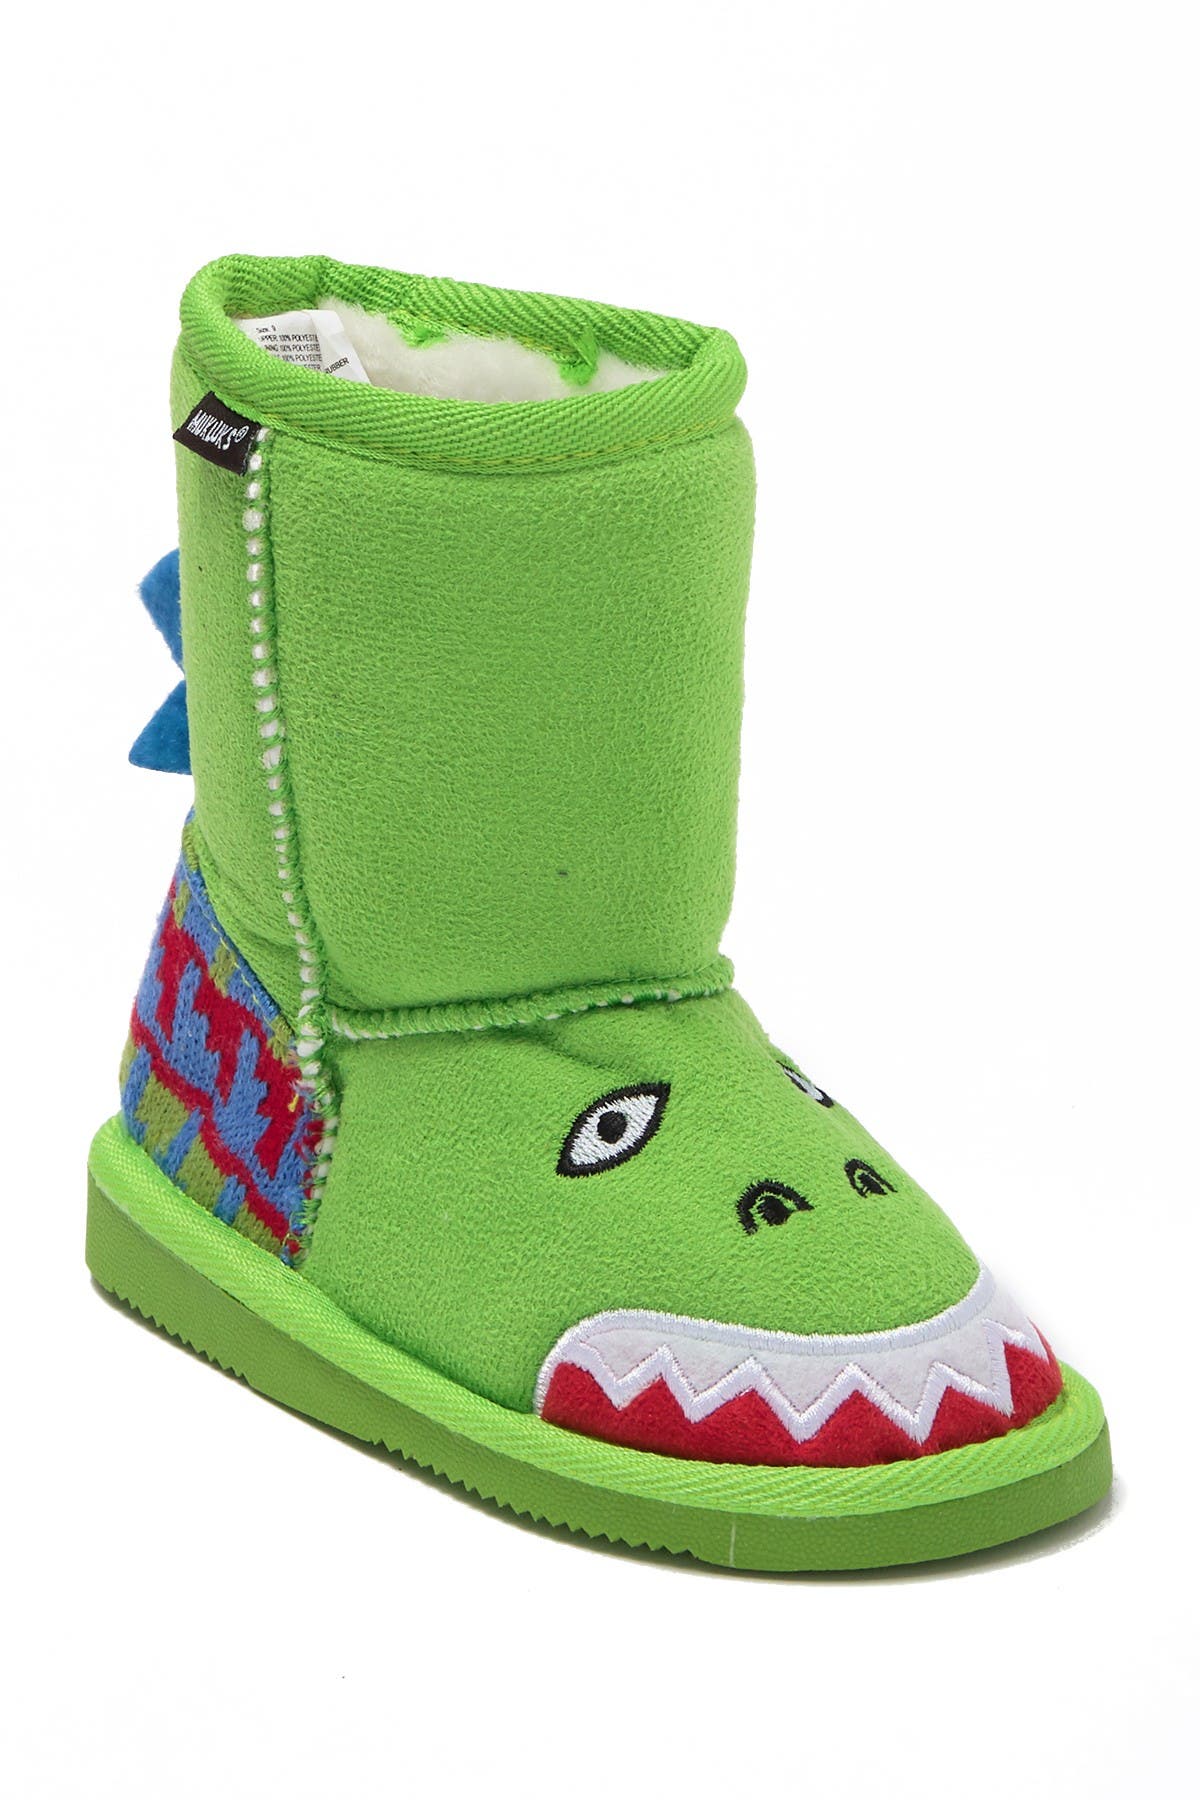 kids dinosaur boots